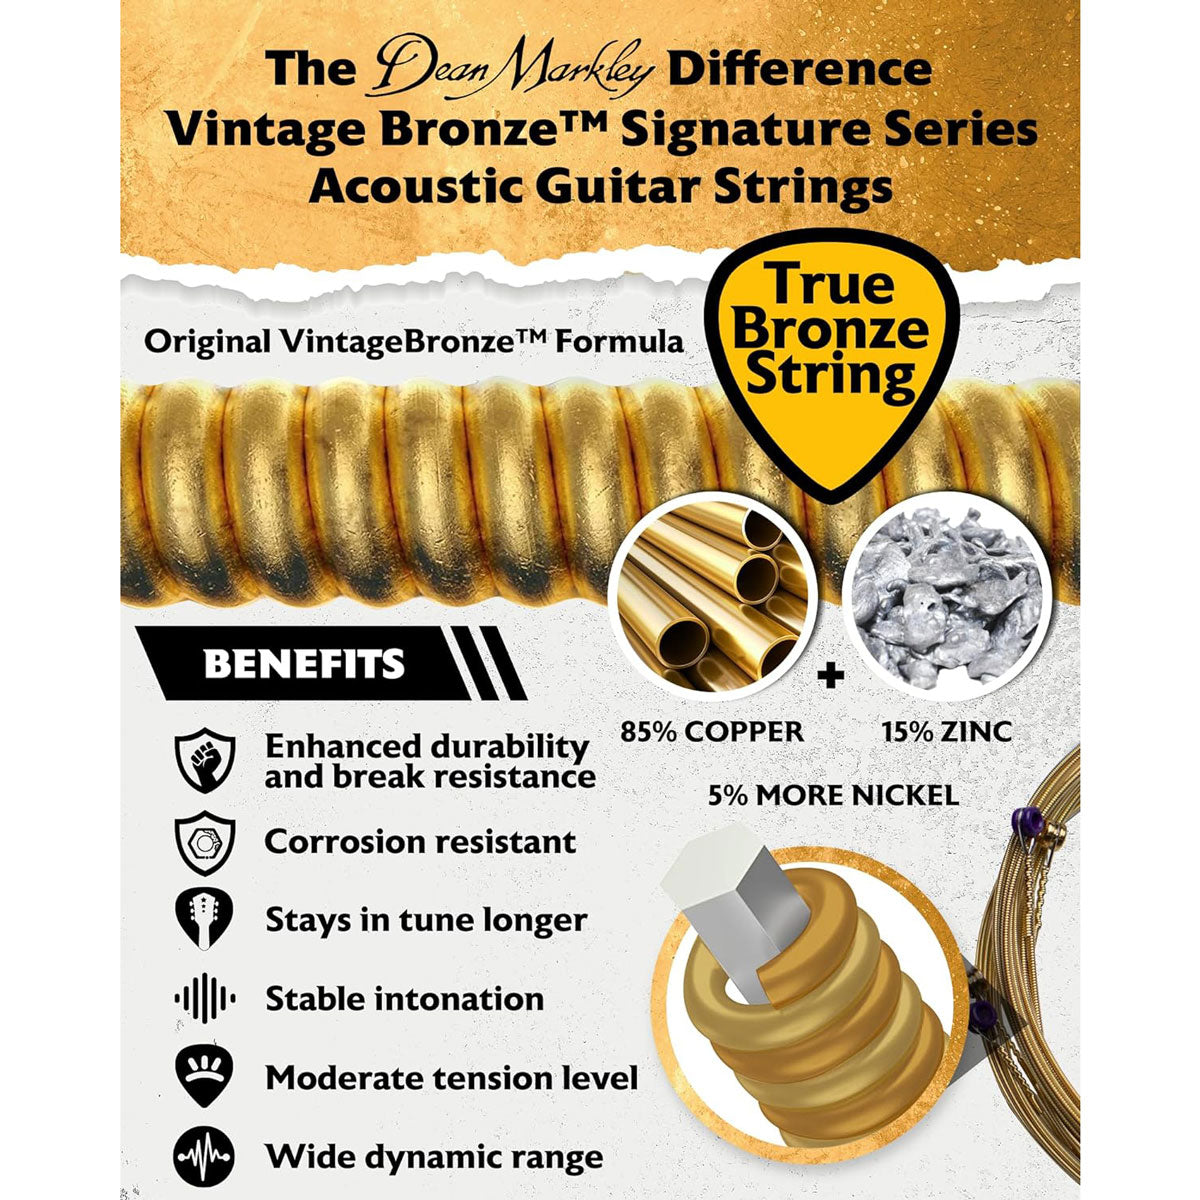 Dean Markley DMK 2002 Acoustic Guitar Strings Vintage Bronze 11-52